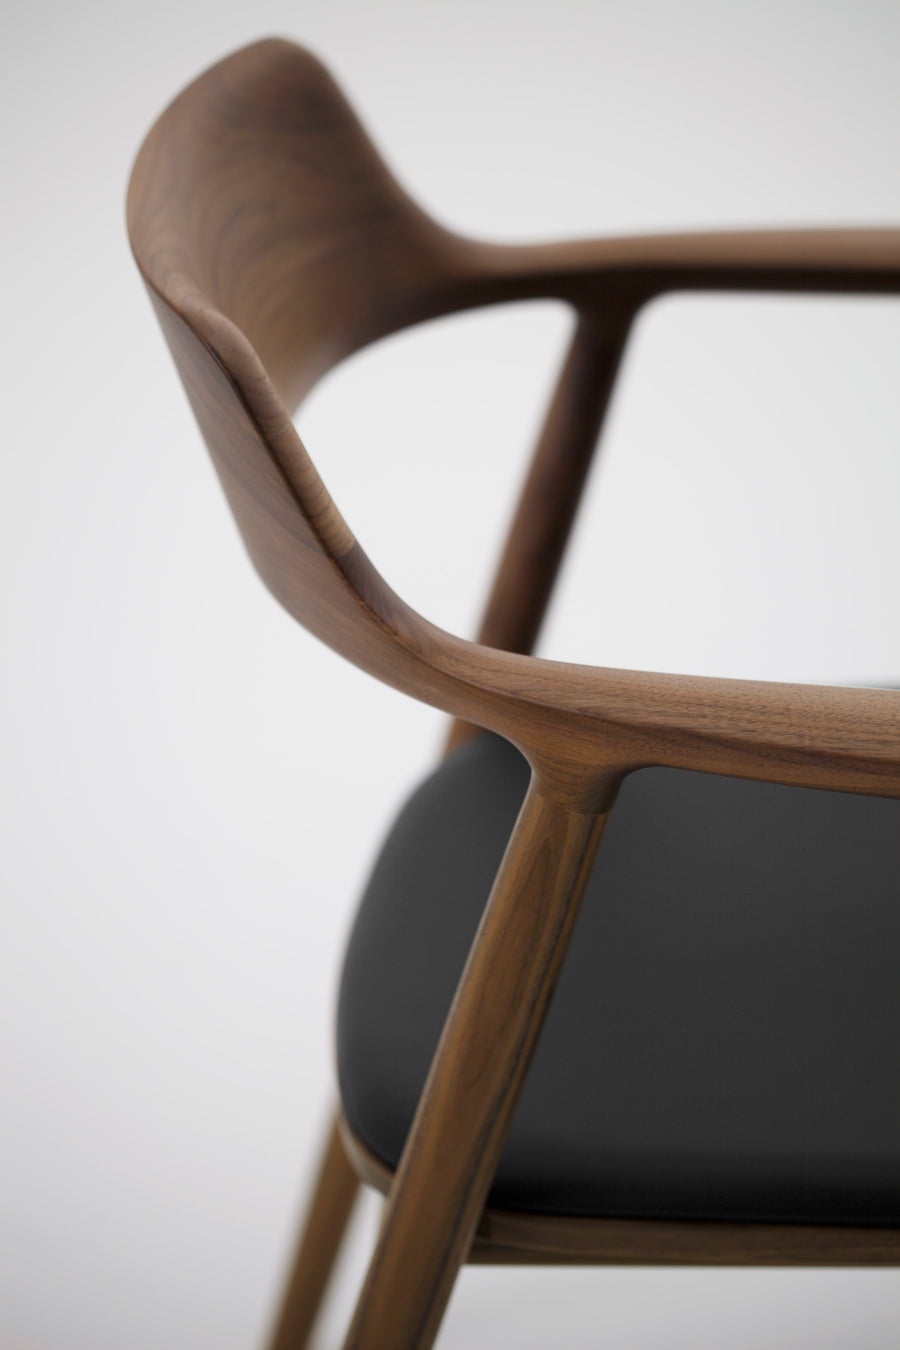 Hiroshima Arm Chair | Leather Cushioned Seat Dining Chair | Walnut Wood